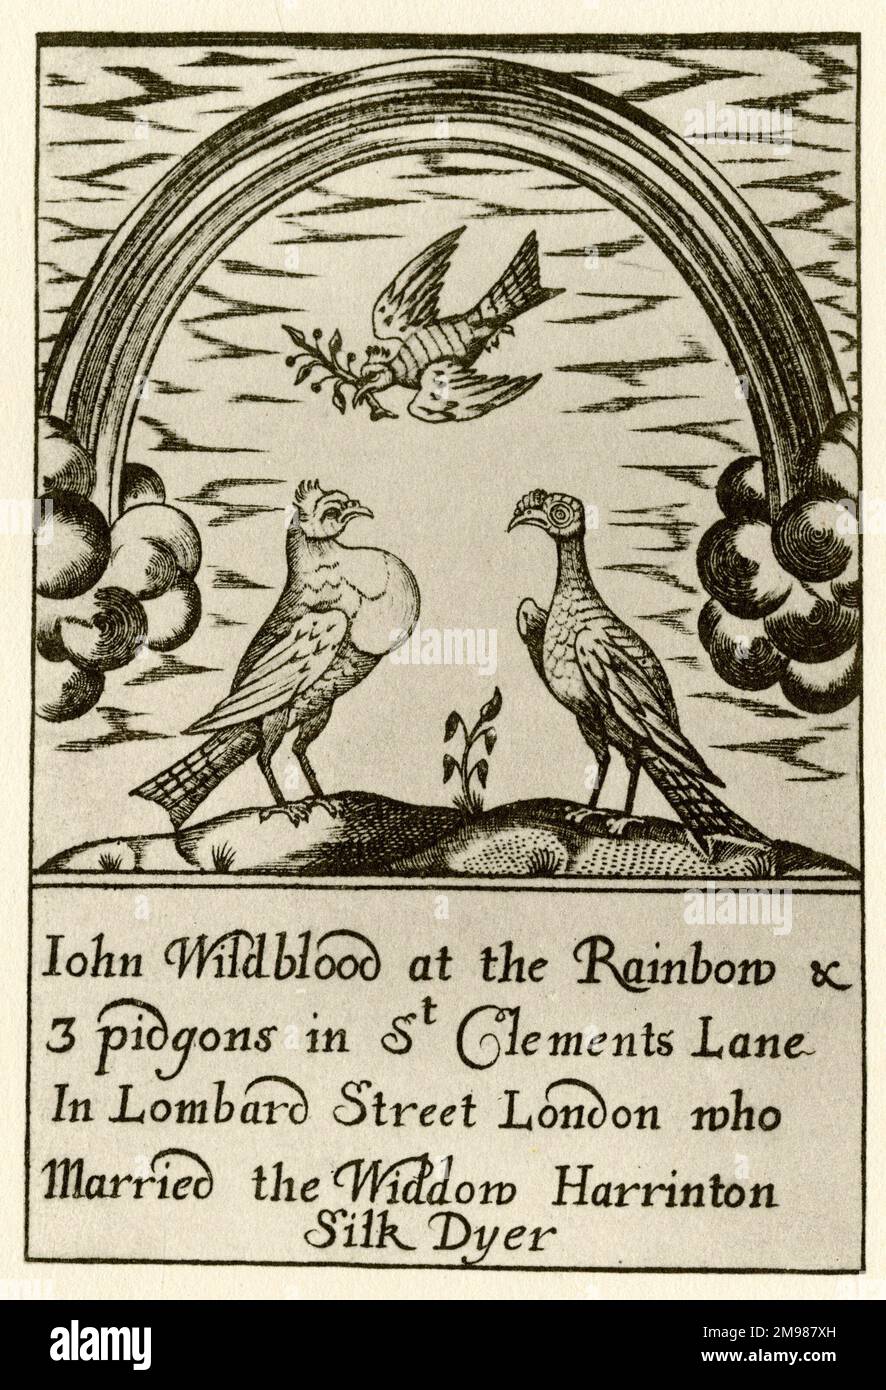 London Trade Card - John Wildblood, Silk Dyer, at the Rainbow and Three Pigeons, St Clements Lane, Lombard Street (che sposò la vedova Harrinton). Foto Stock